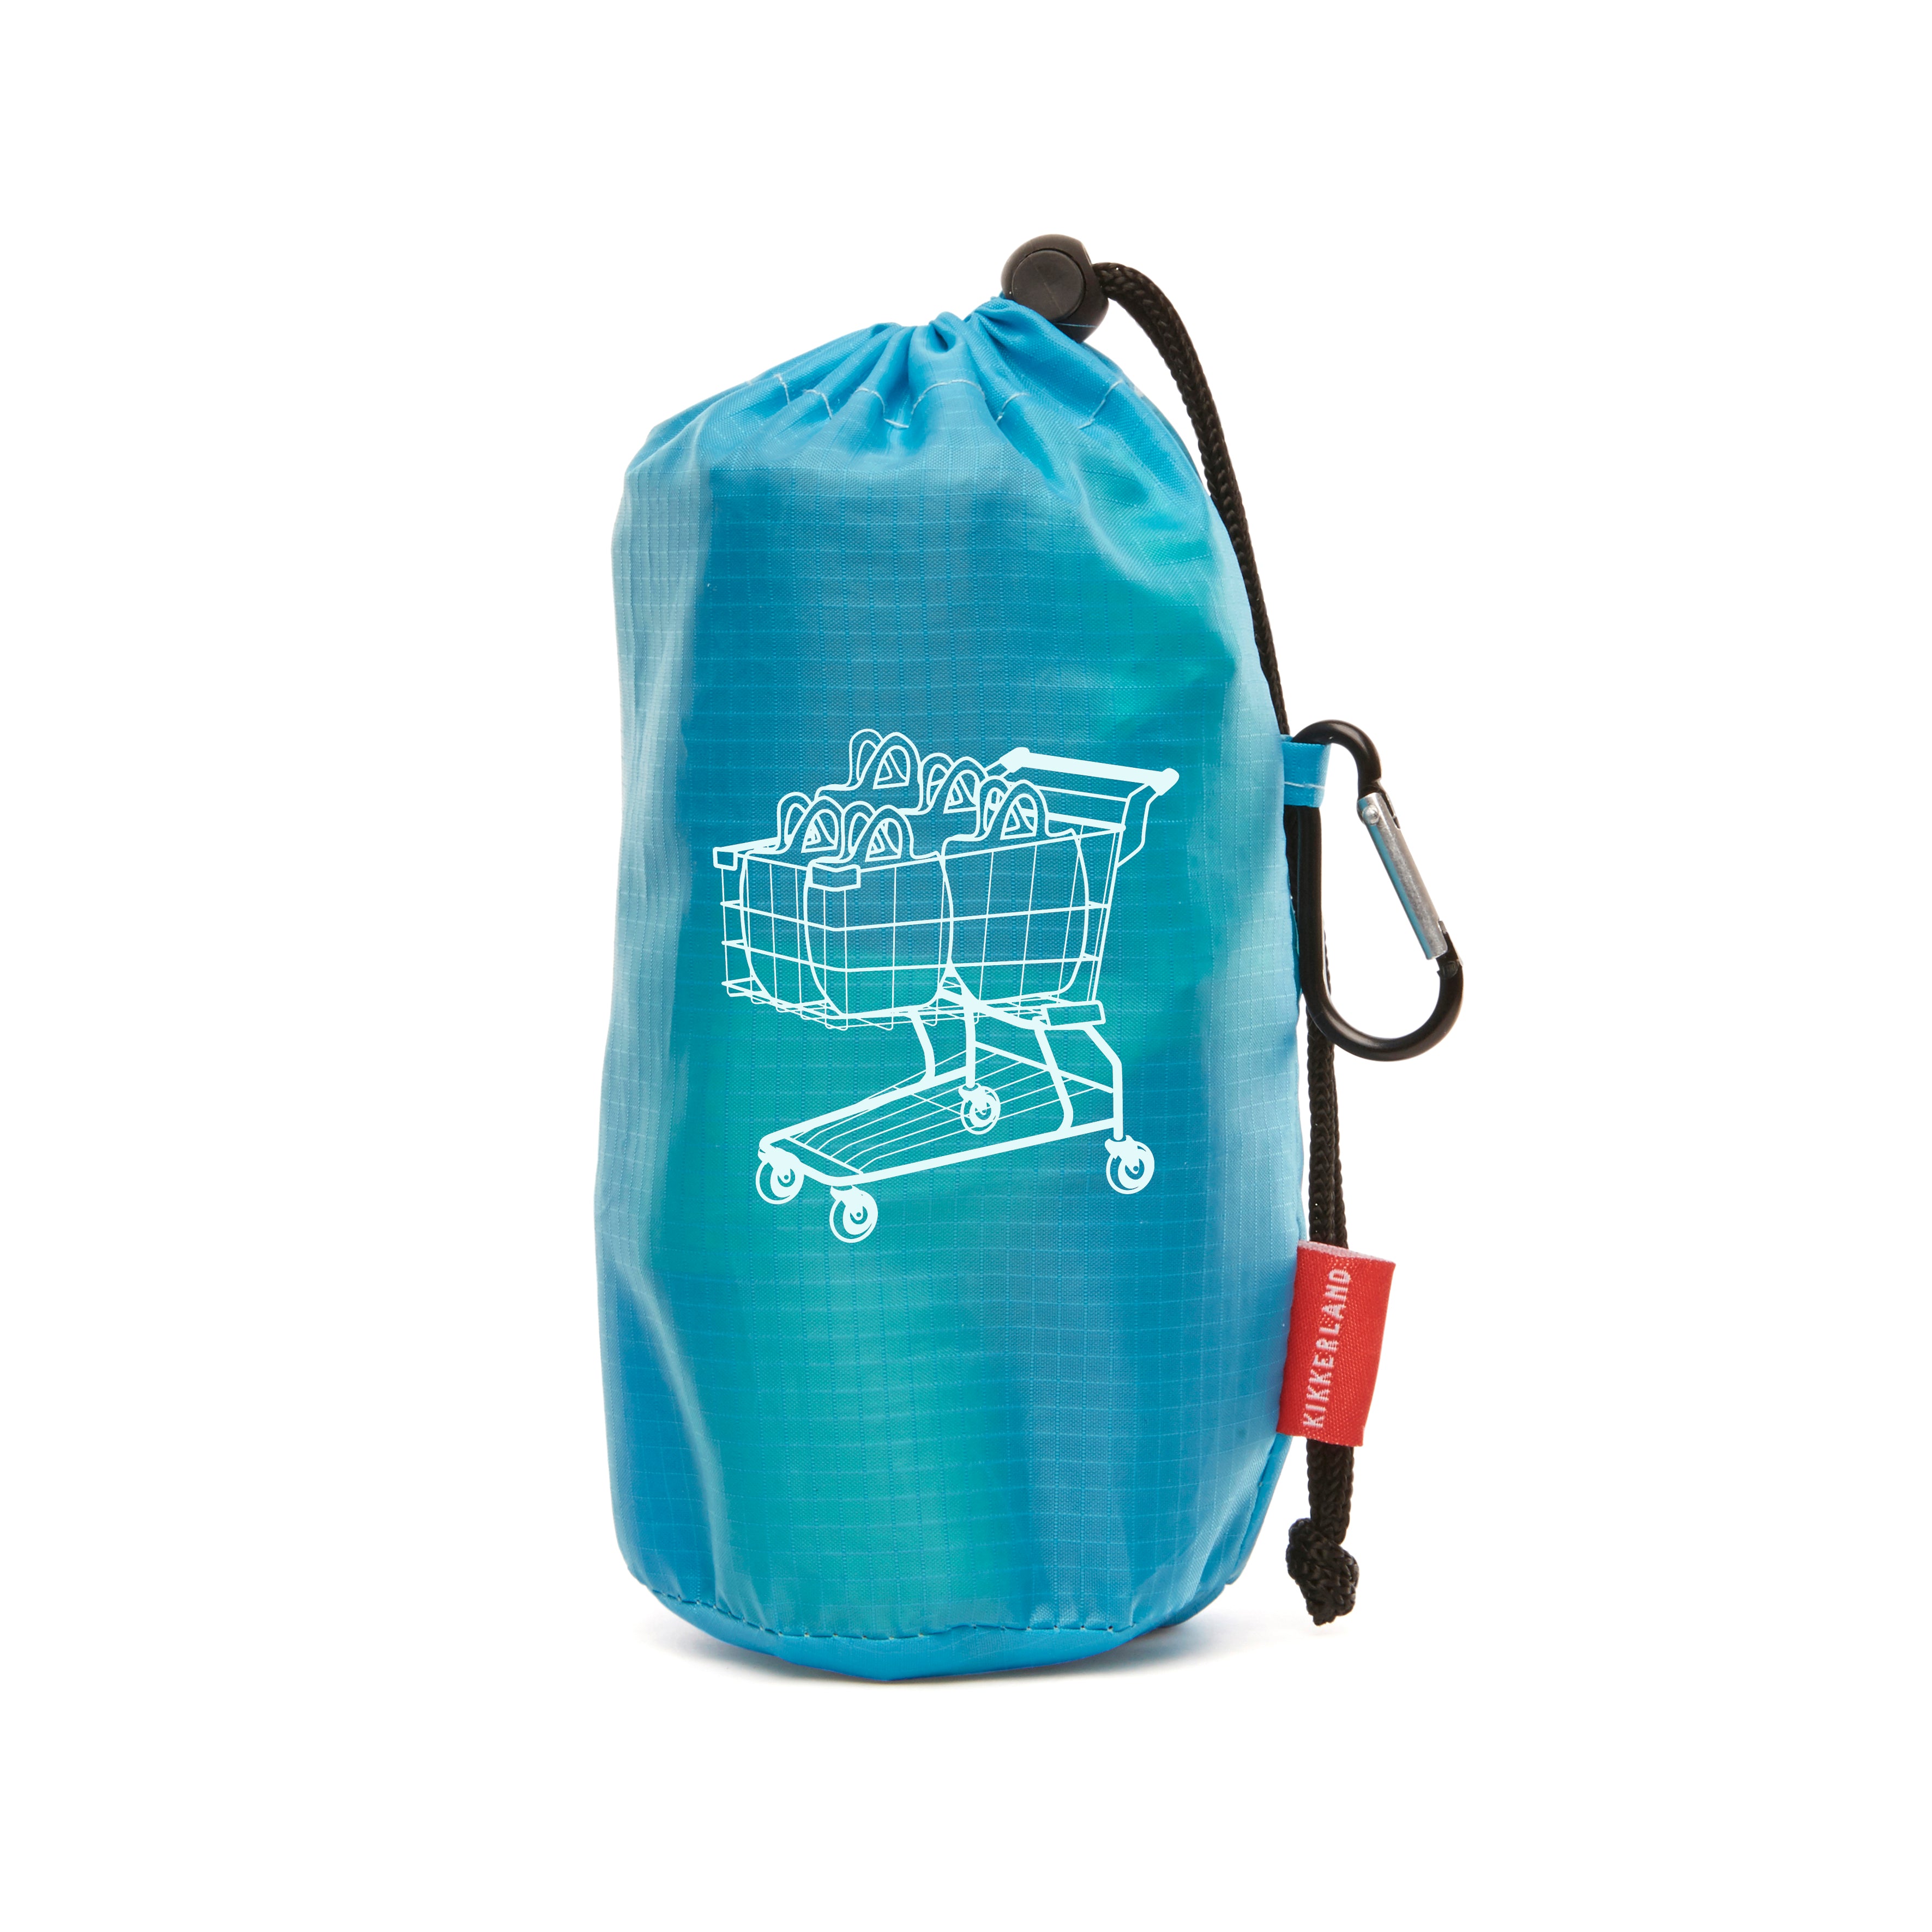 Small Zipper Bags – Kikkerland Design Inc